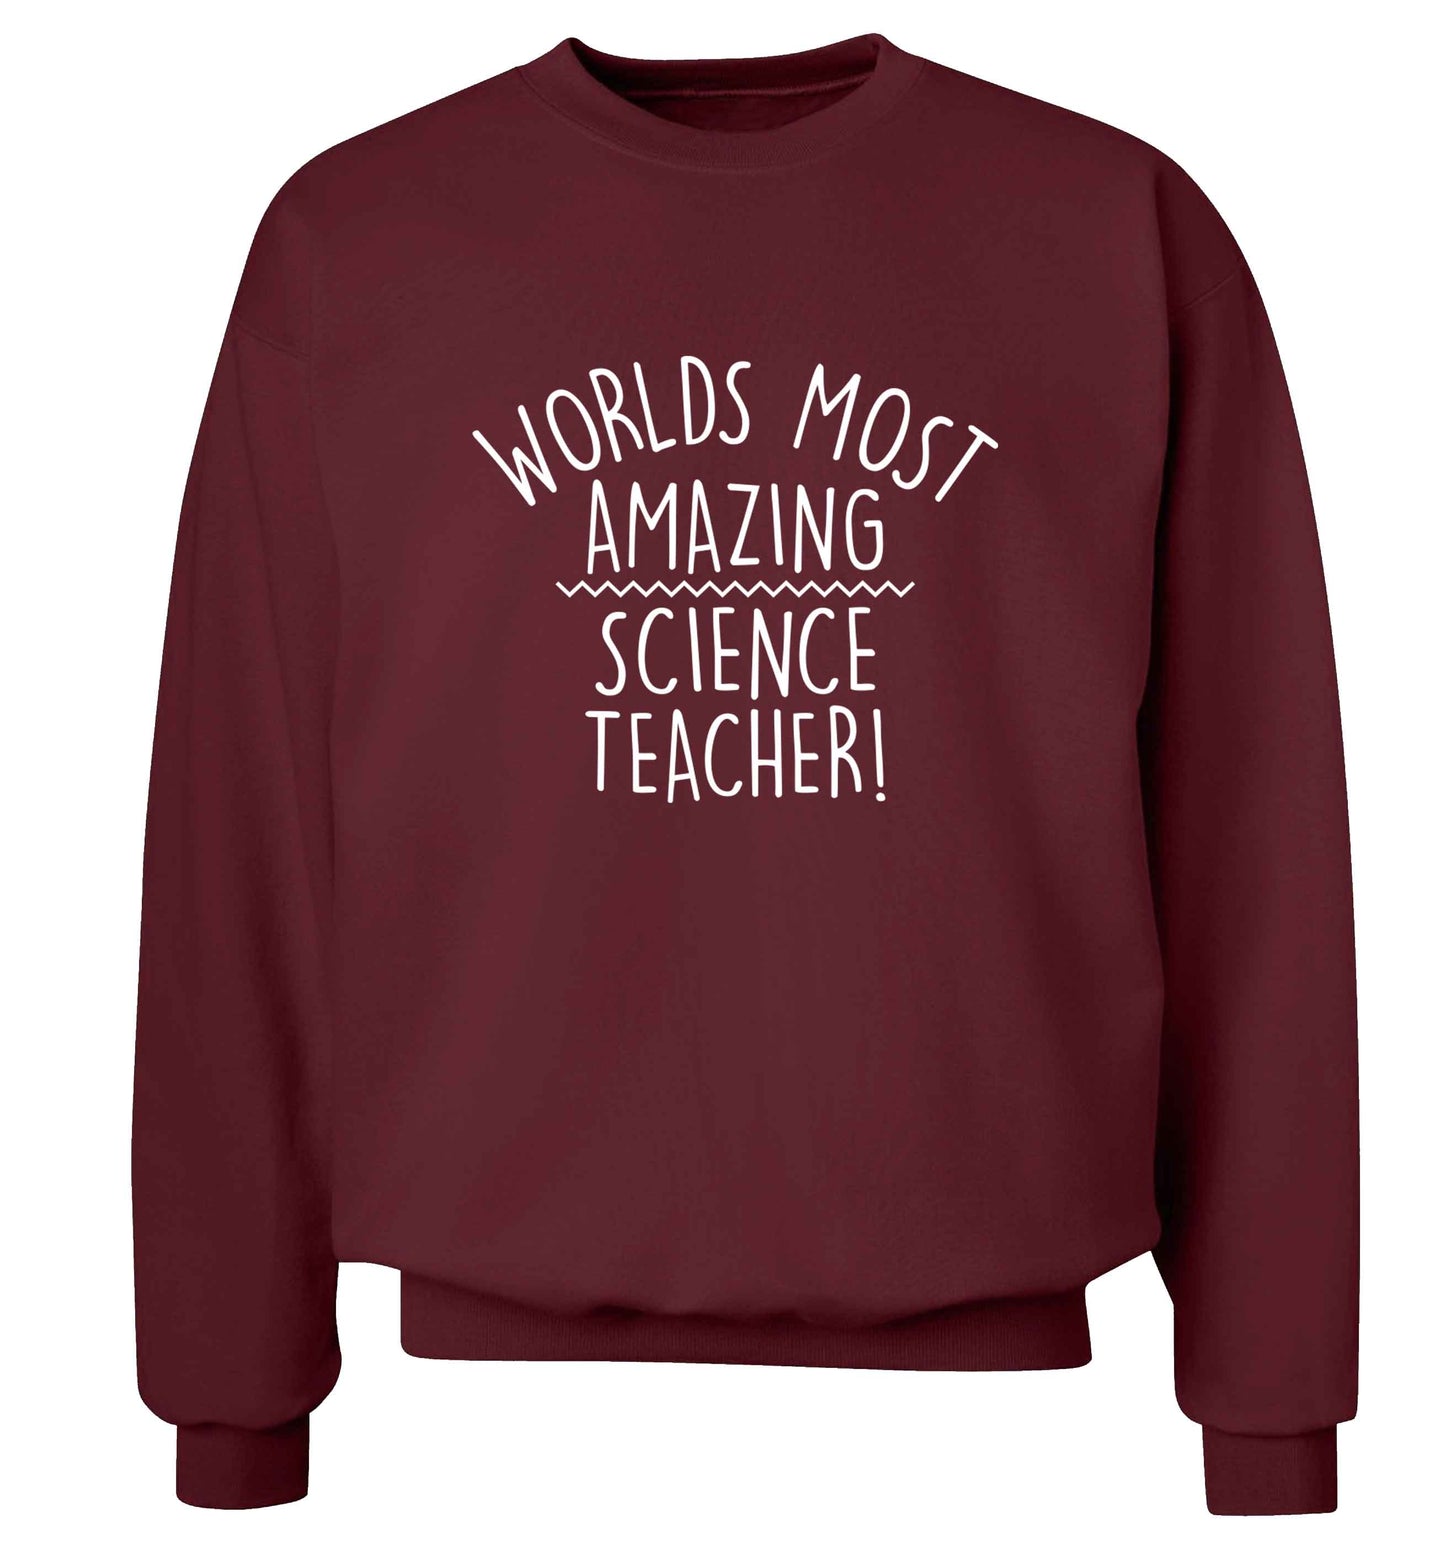 Worlds most amazing science teacher adult's unisex maroon sweater 2XL